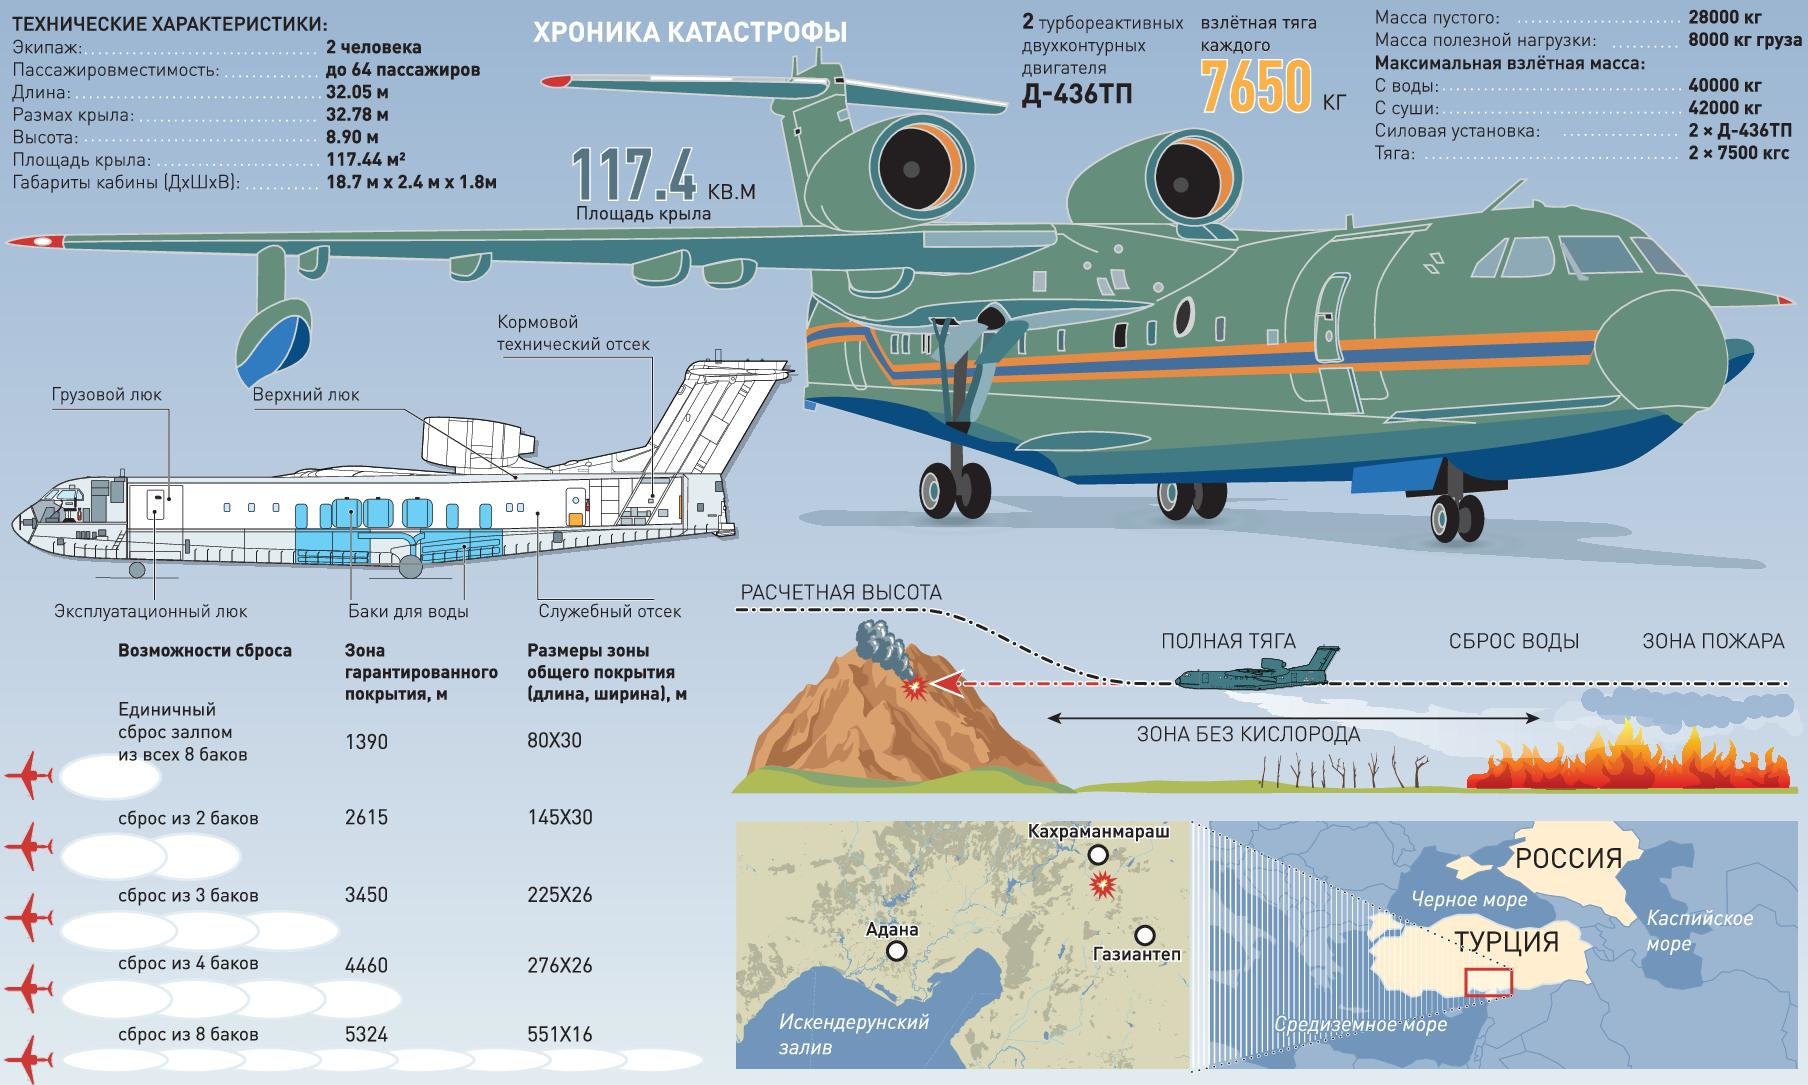 Самолет амфибия бе-200: характеристики